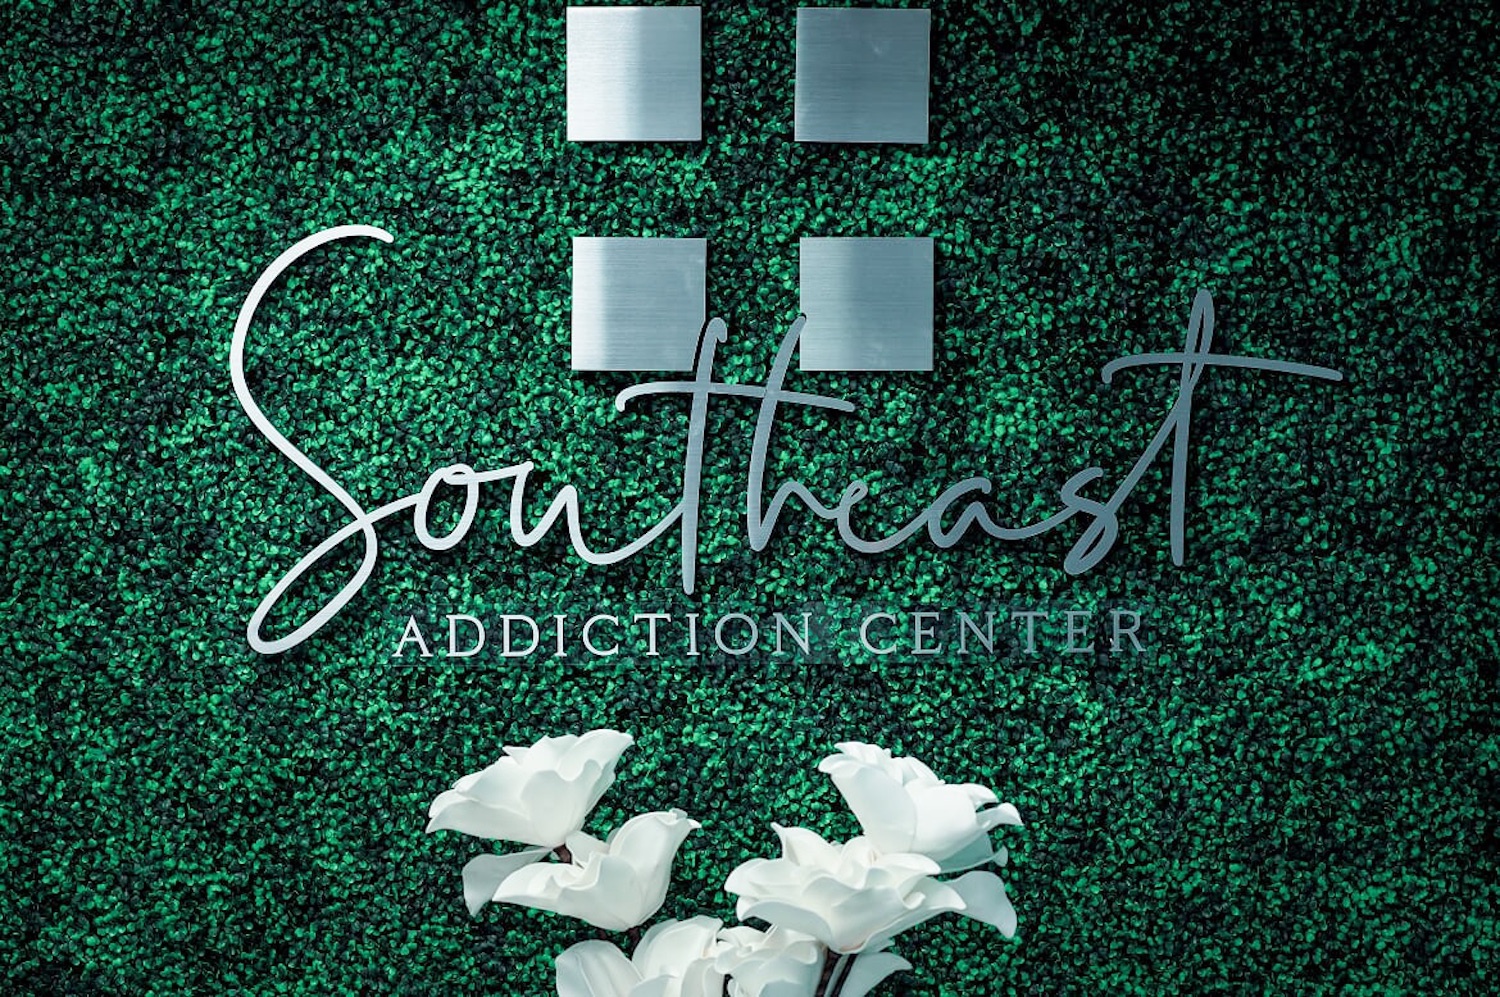 Southeast Addiction Center cover